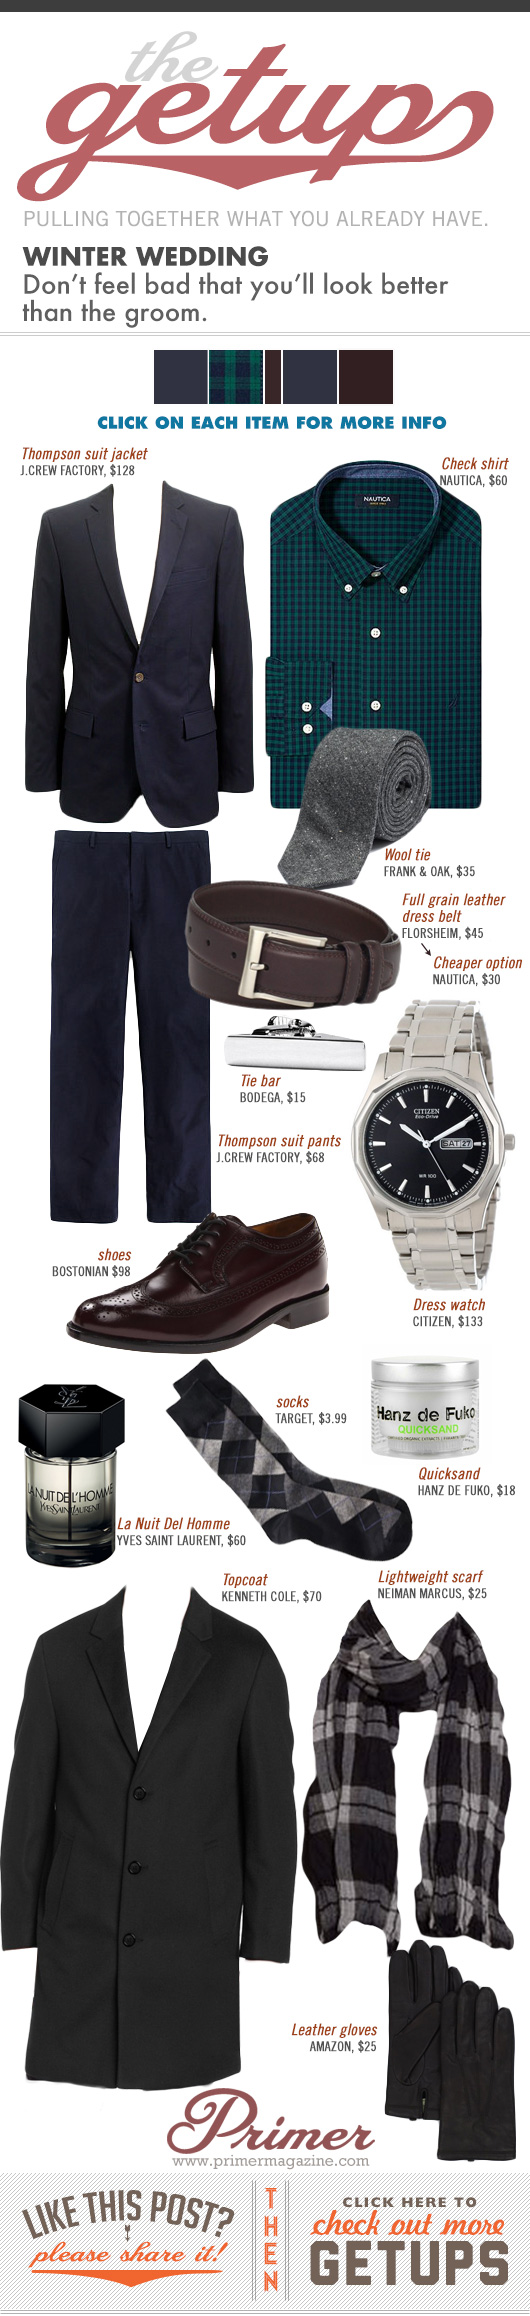 Getup Winter Wedding - Navy suit, Green shirt, gray tie, brown shoes